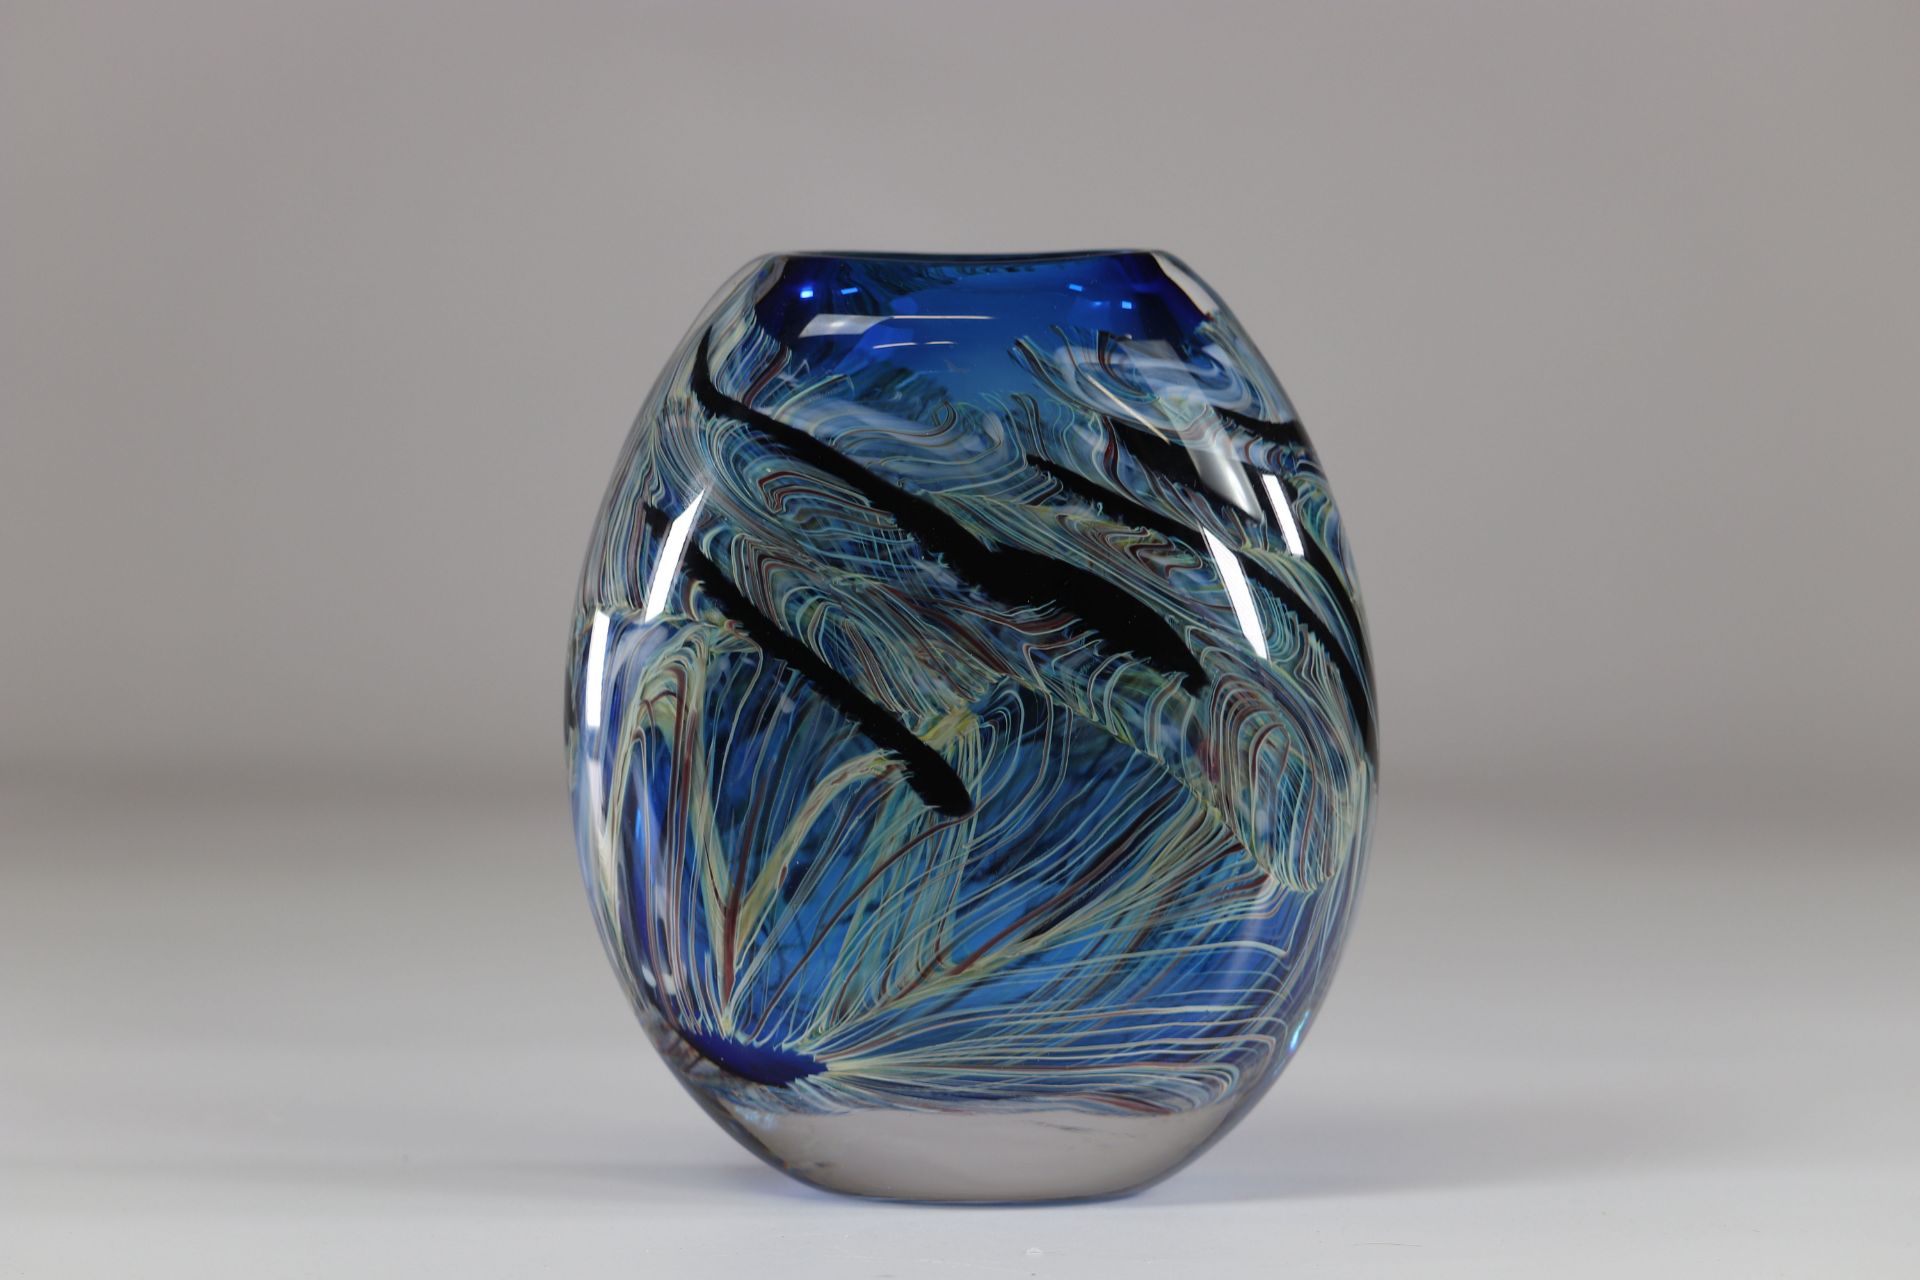 Maxence Parot - Large Opaline Vase bursts of color